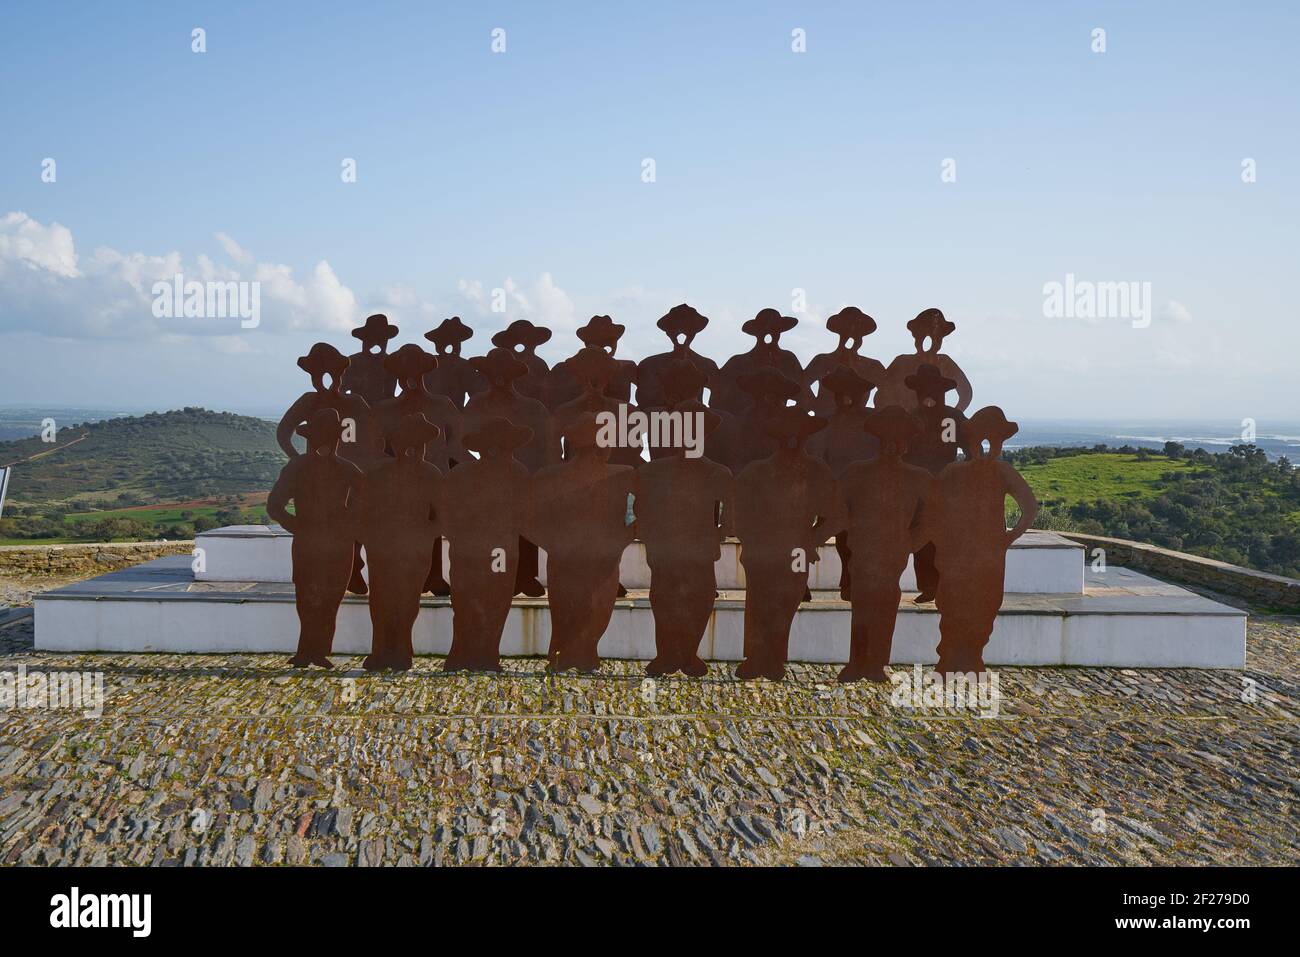 Monsaraz canto alentejano singing men with the village on the background in Alentejo, Portugal Stock Photo